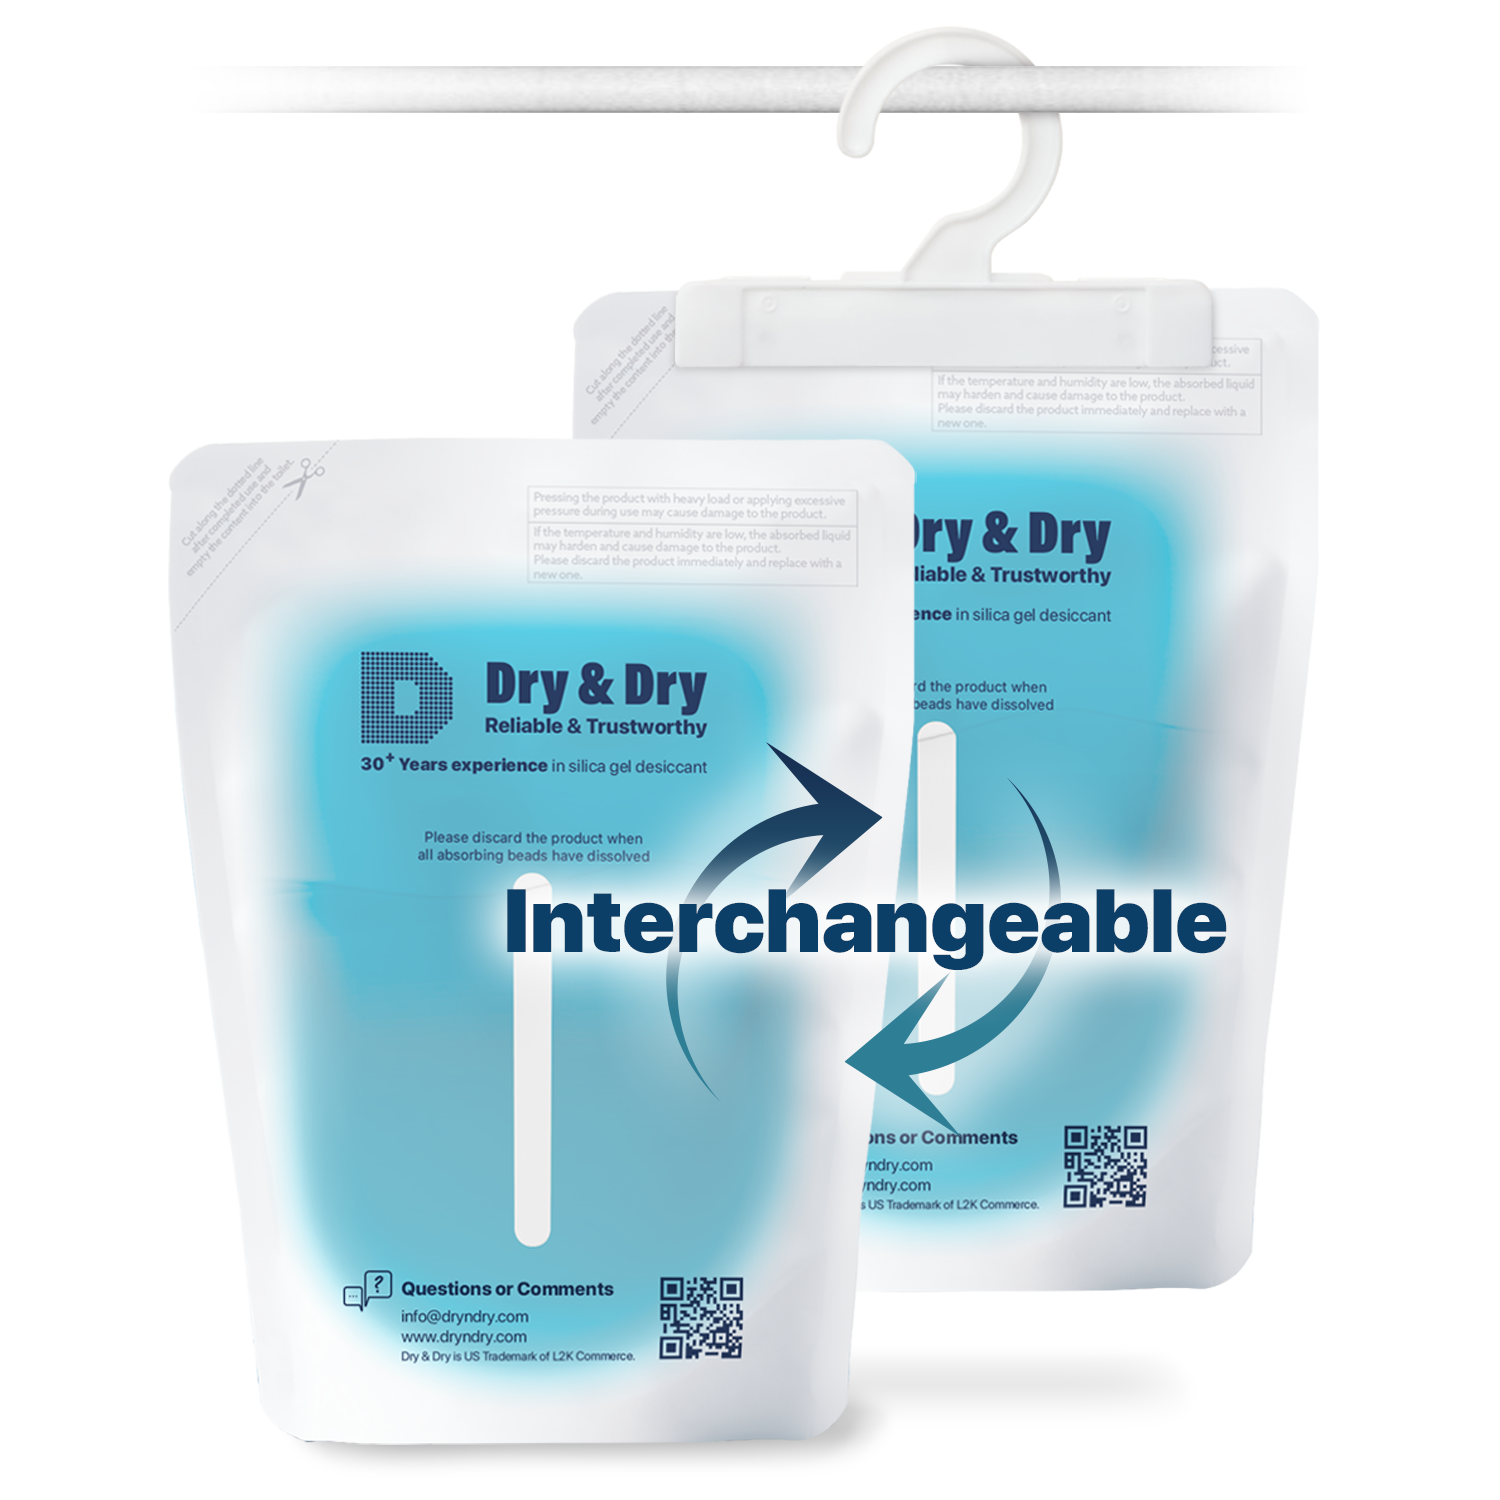 Dry & Dry 6 Packs Premium Standing or Hanging Hybrid Moisture Absorbers